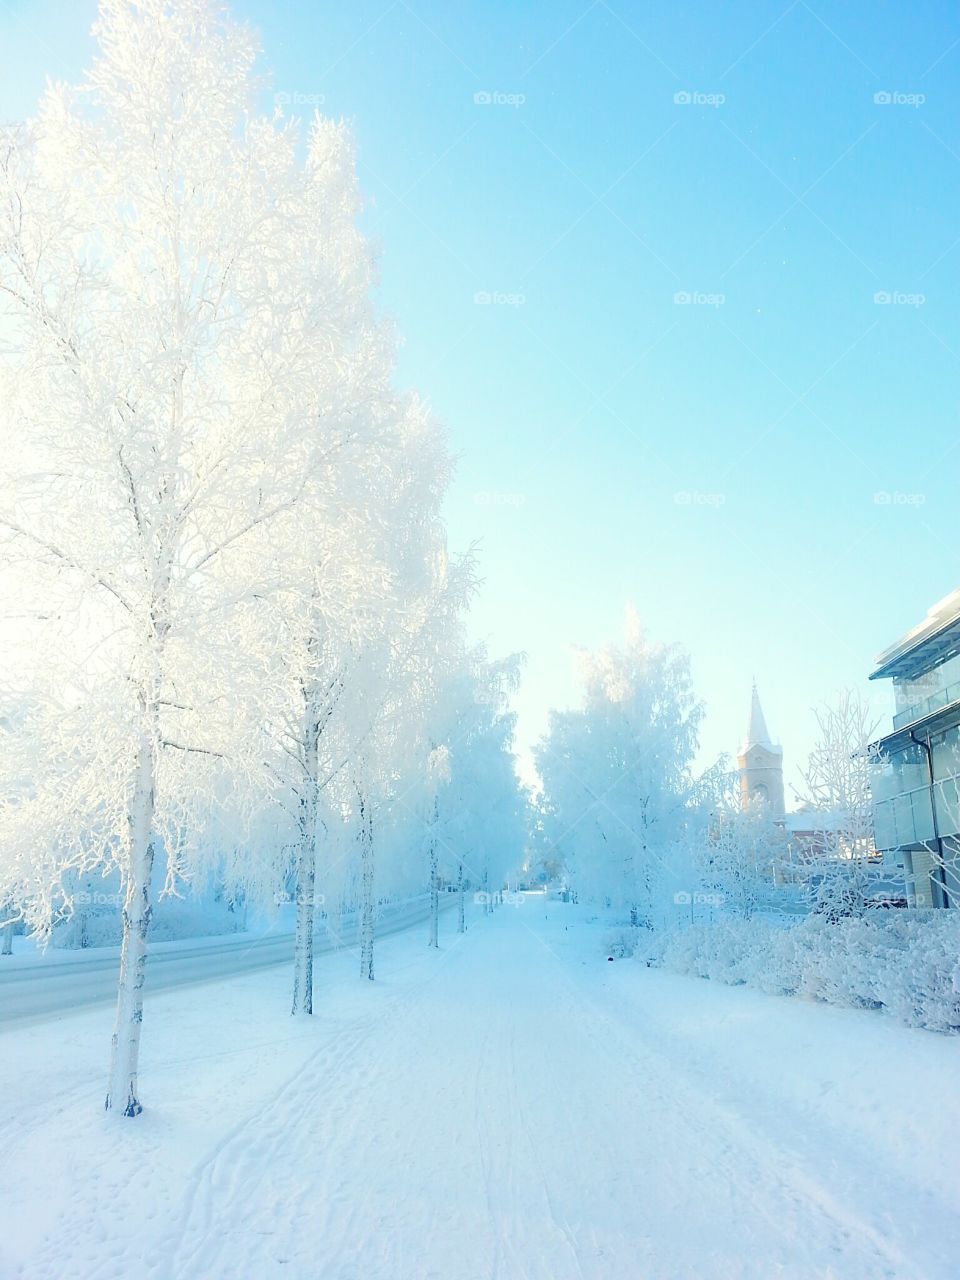 Countryside Winter. Beautiful winter scene captured in Finland.